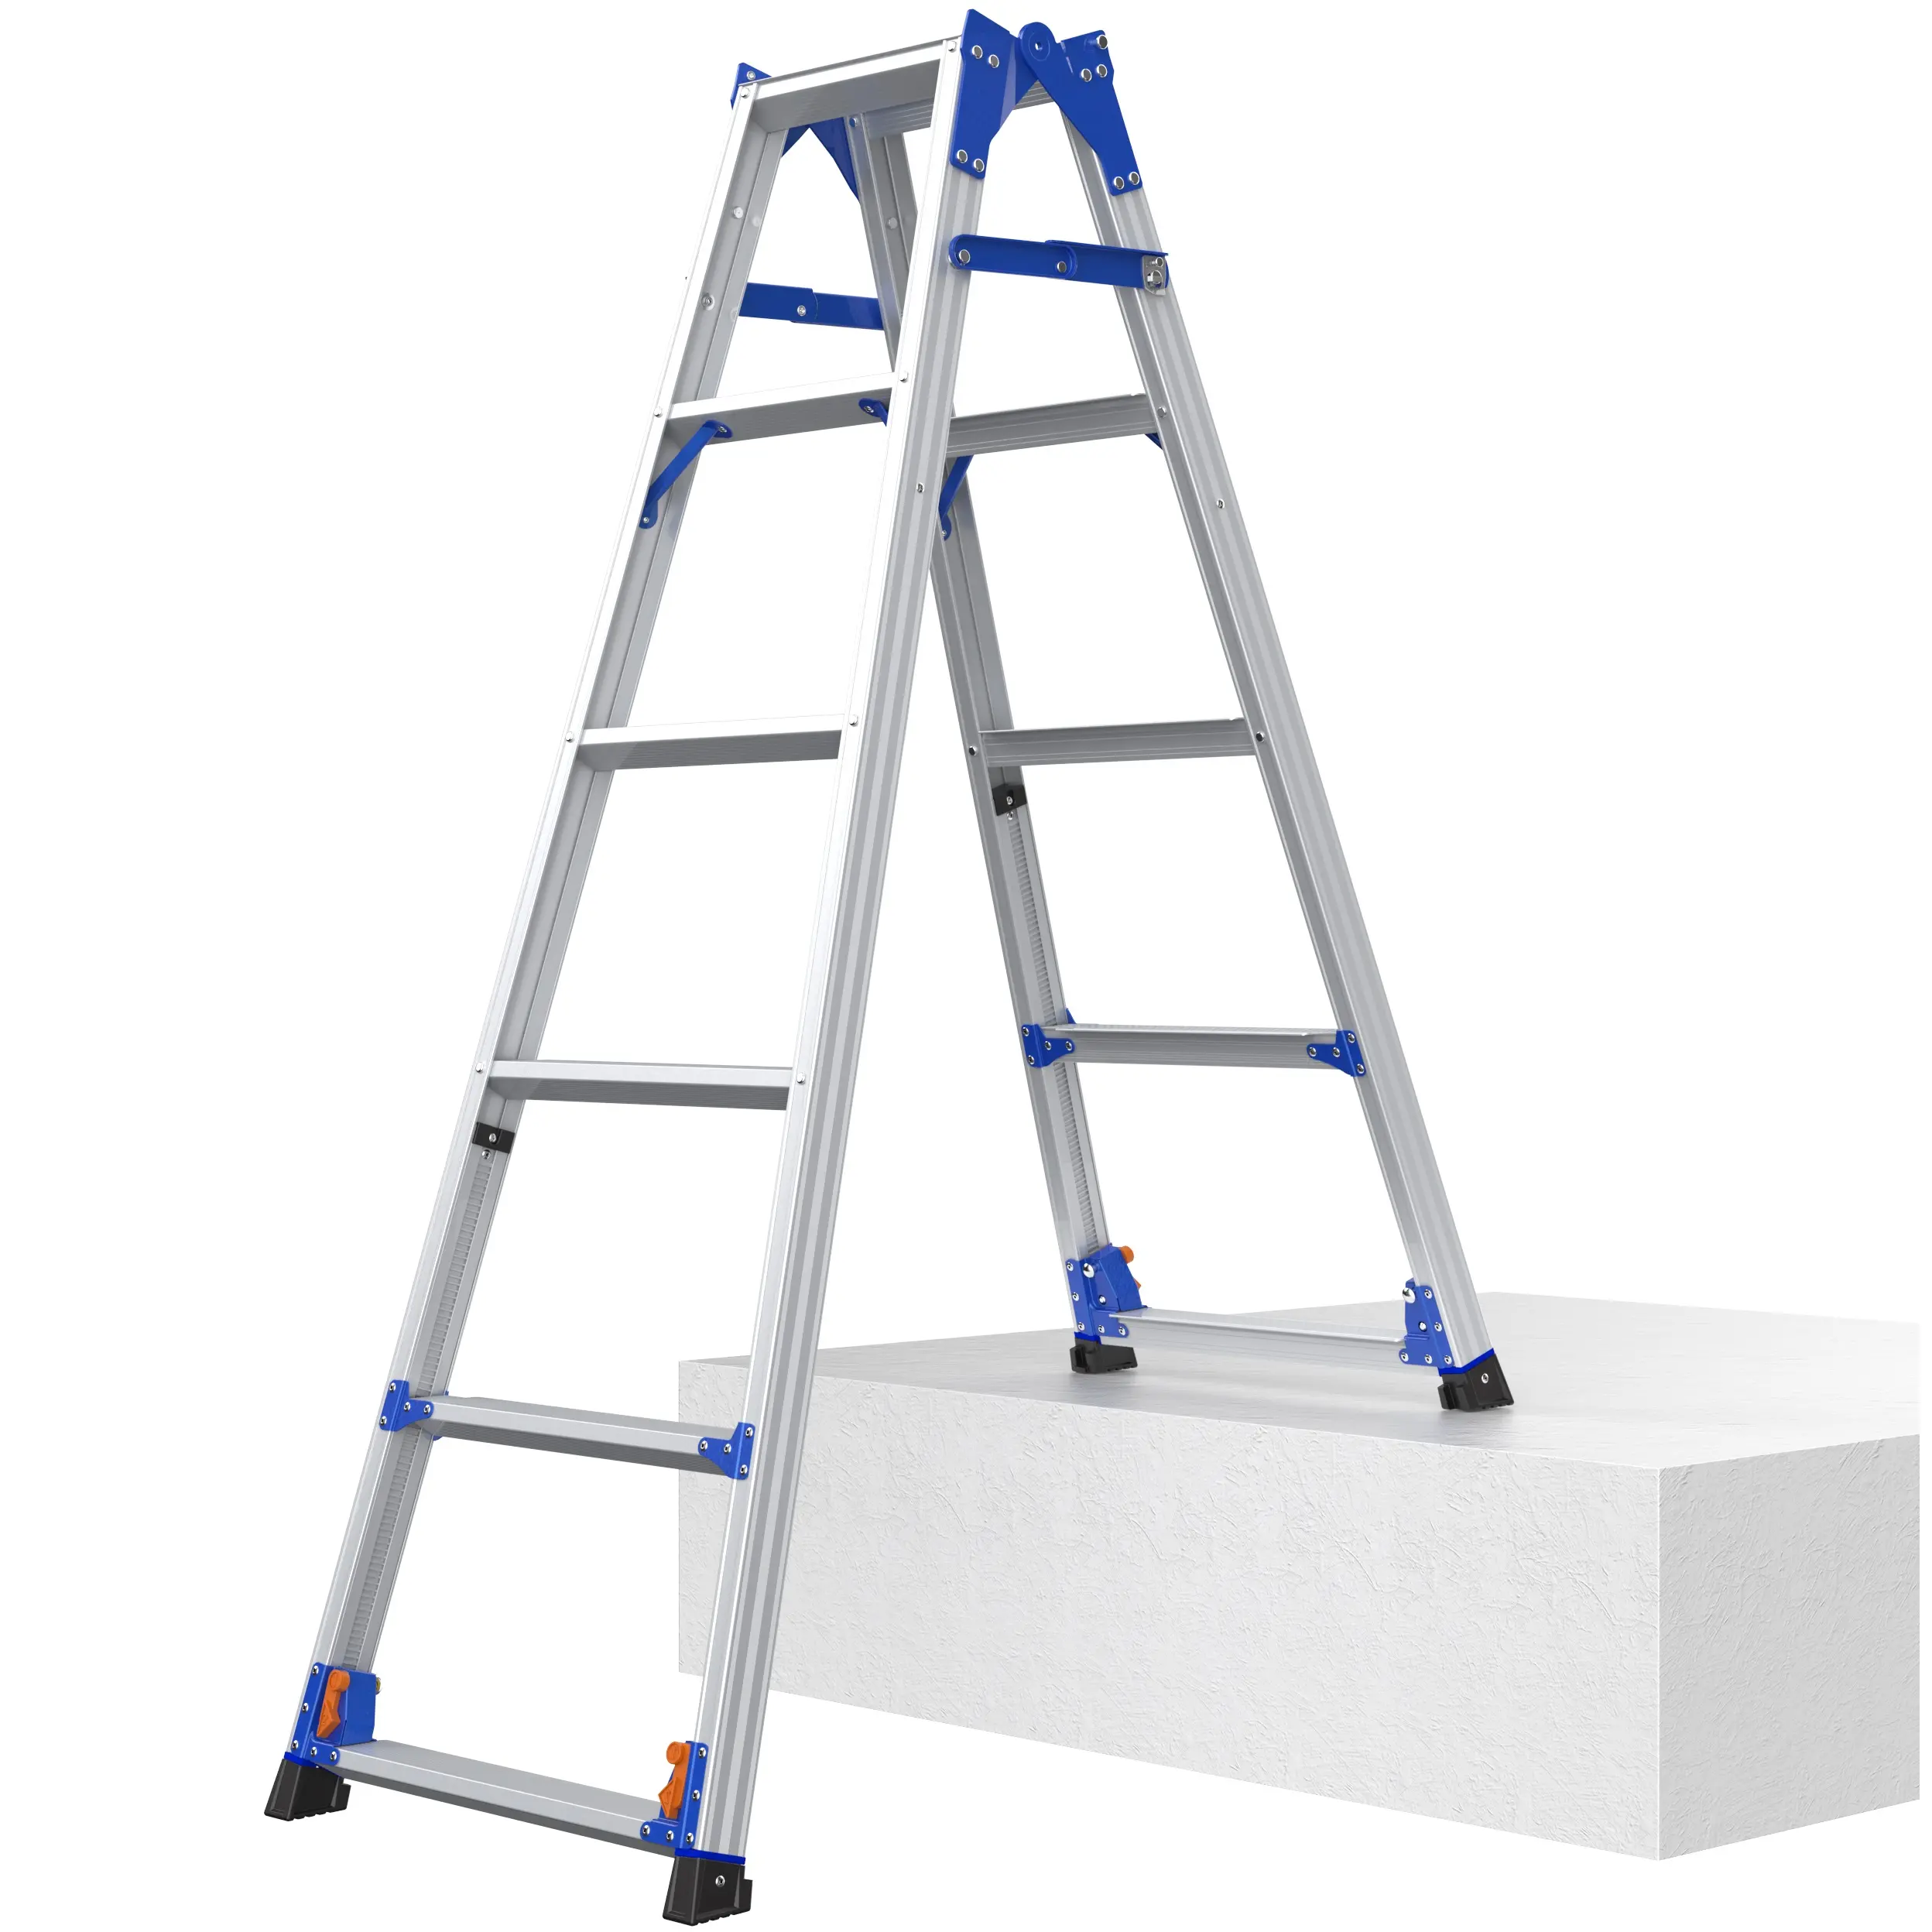 Double side aluminium herringbone ladder with adjustable feet